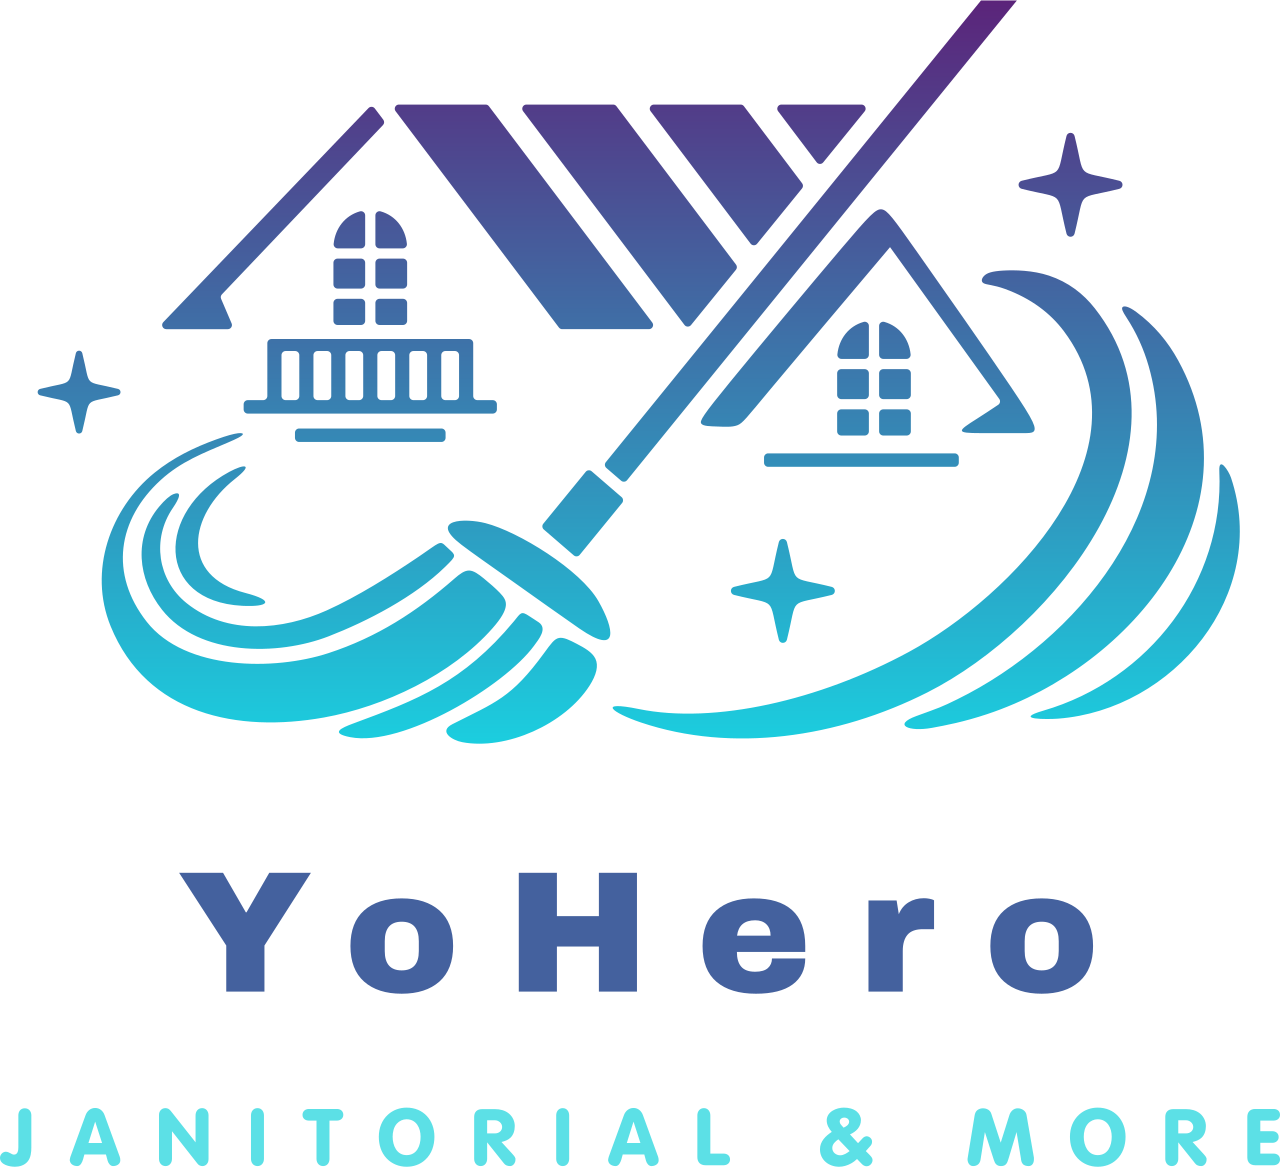 YoHeroJM's logo